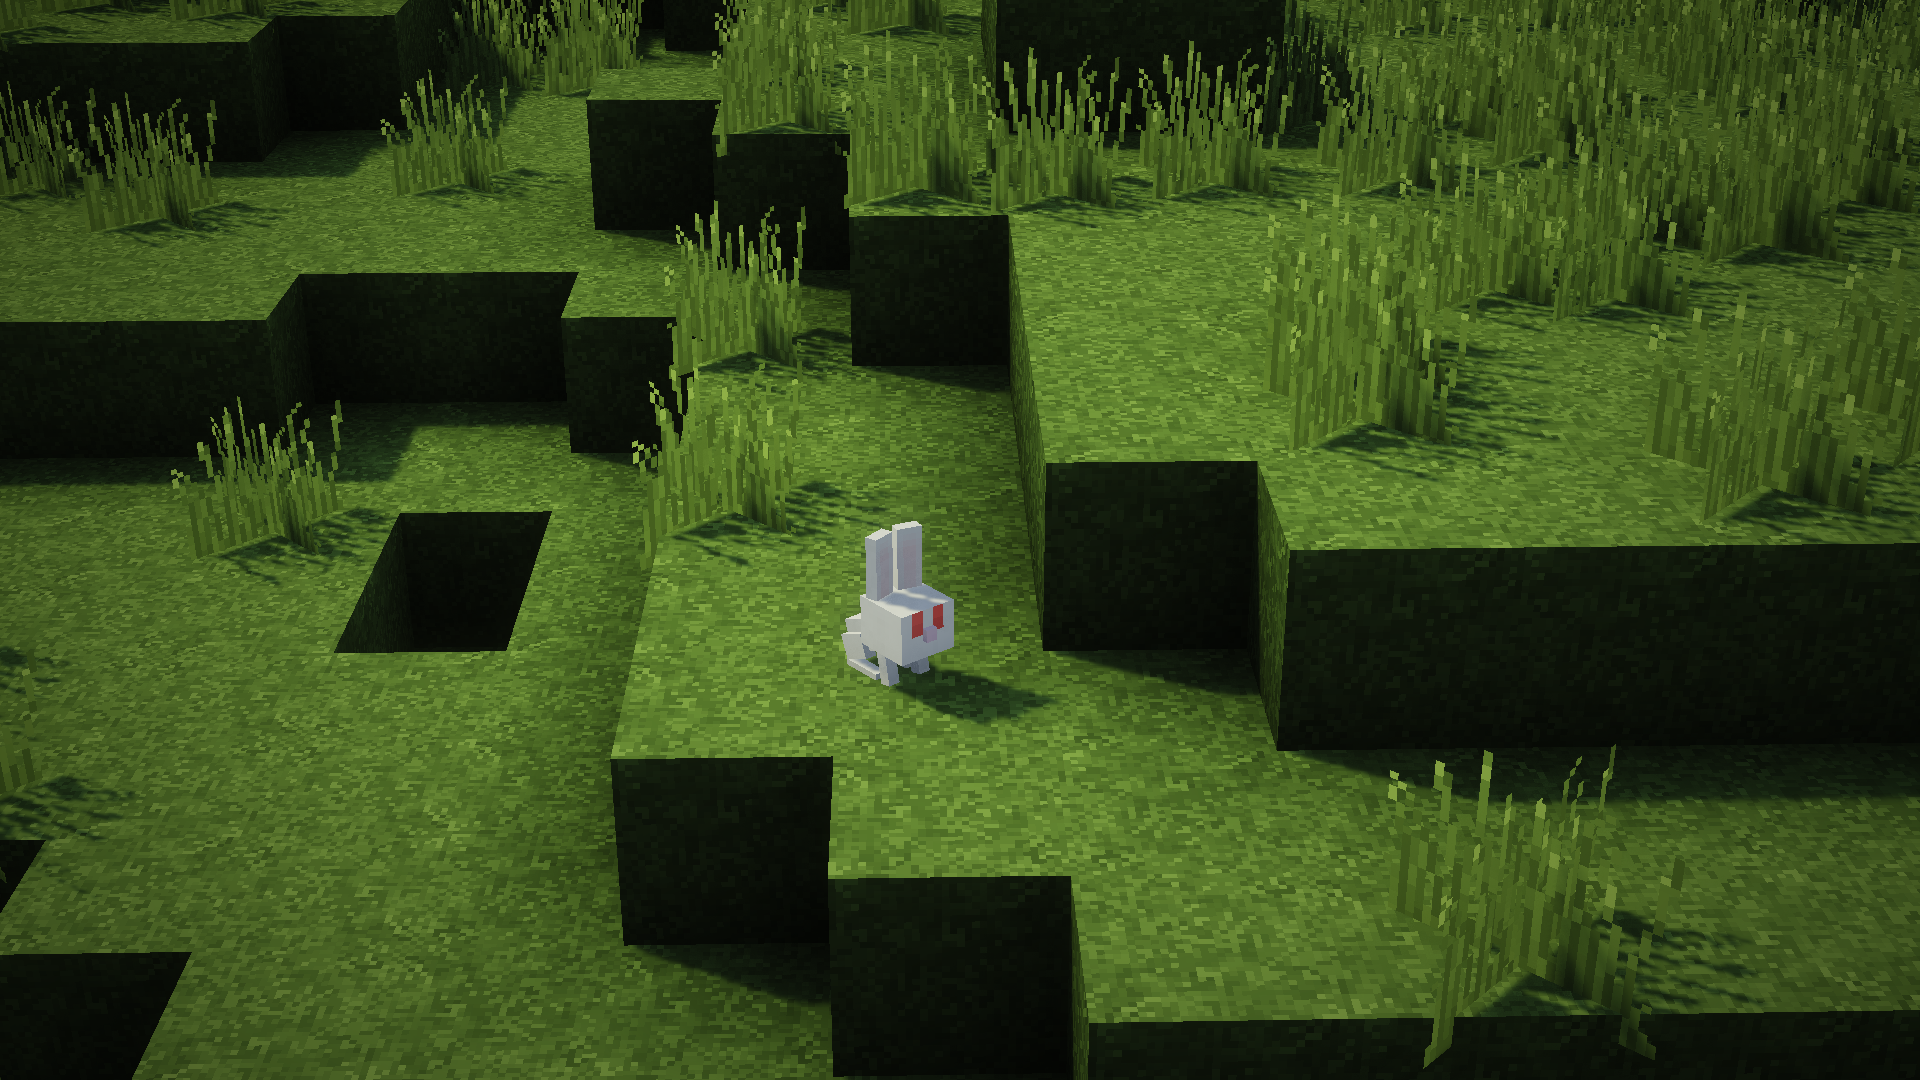 PC Gaming Video Games Screen Shot Green Minecraft White Rabbit Grass 1920x1080